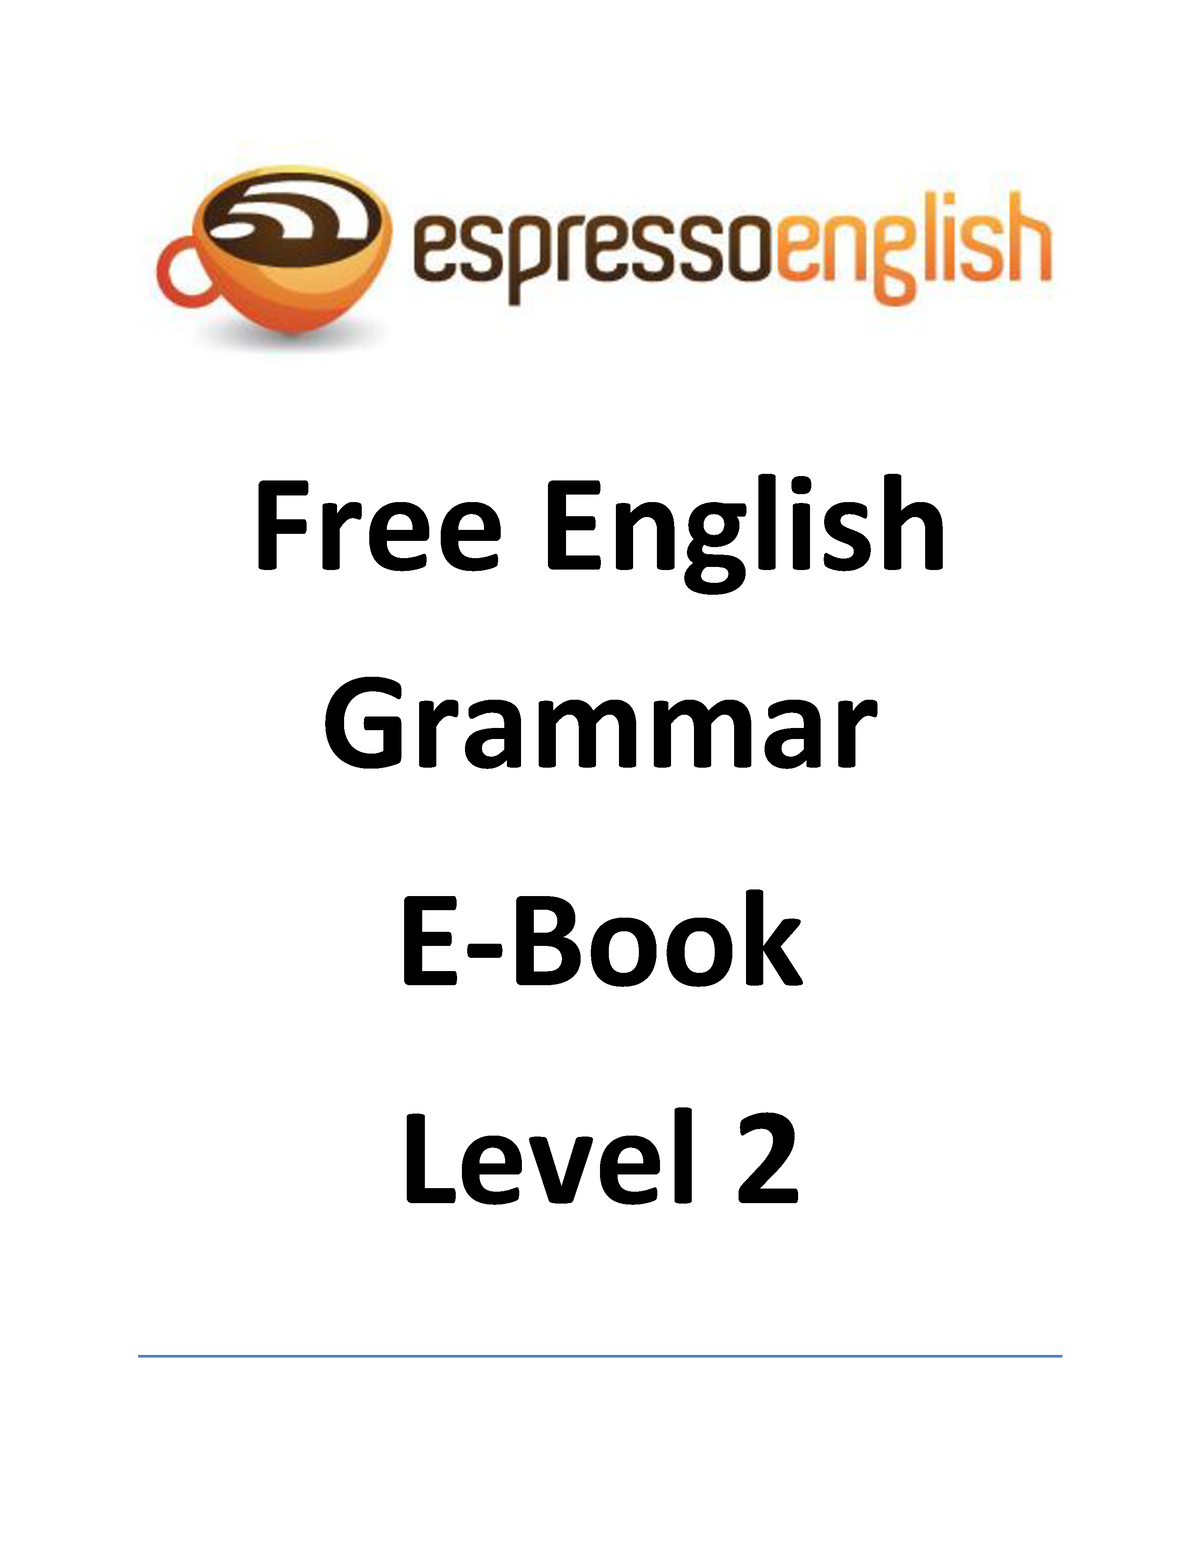 07-english-grammar-author-espresso-english-free-english-grammar-e